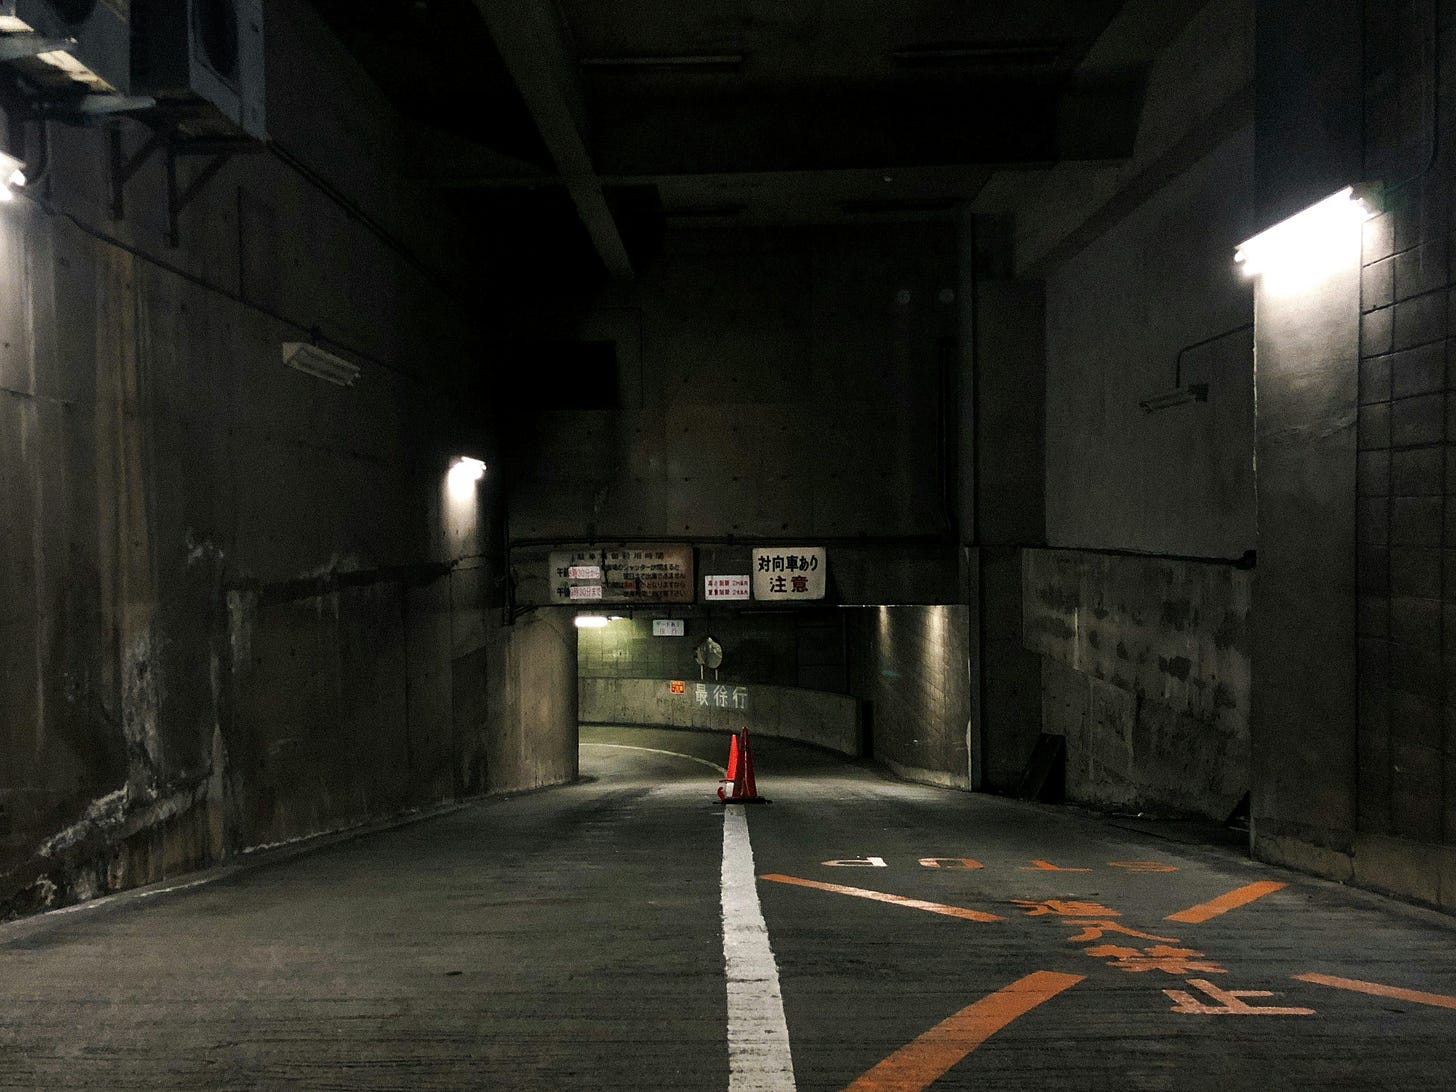 Dark descending parking garage ramp